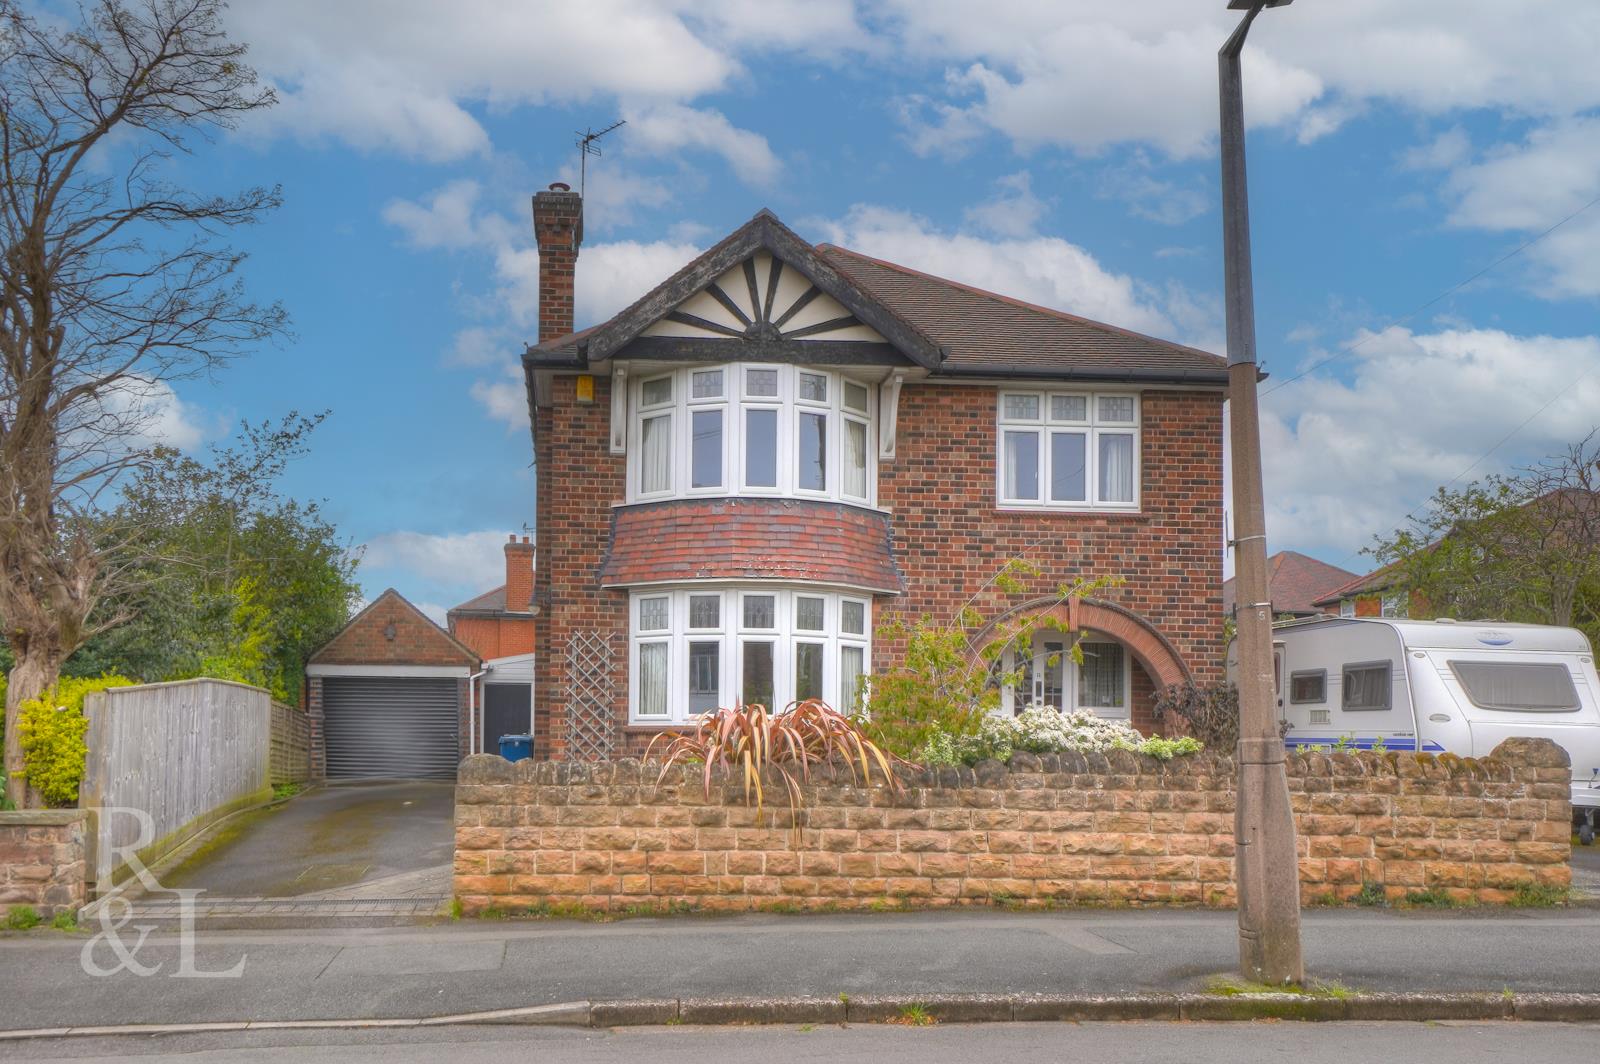 Property image for Stamford Road, West Bridgford, Nottingham